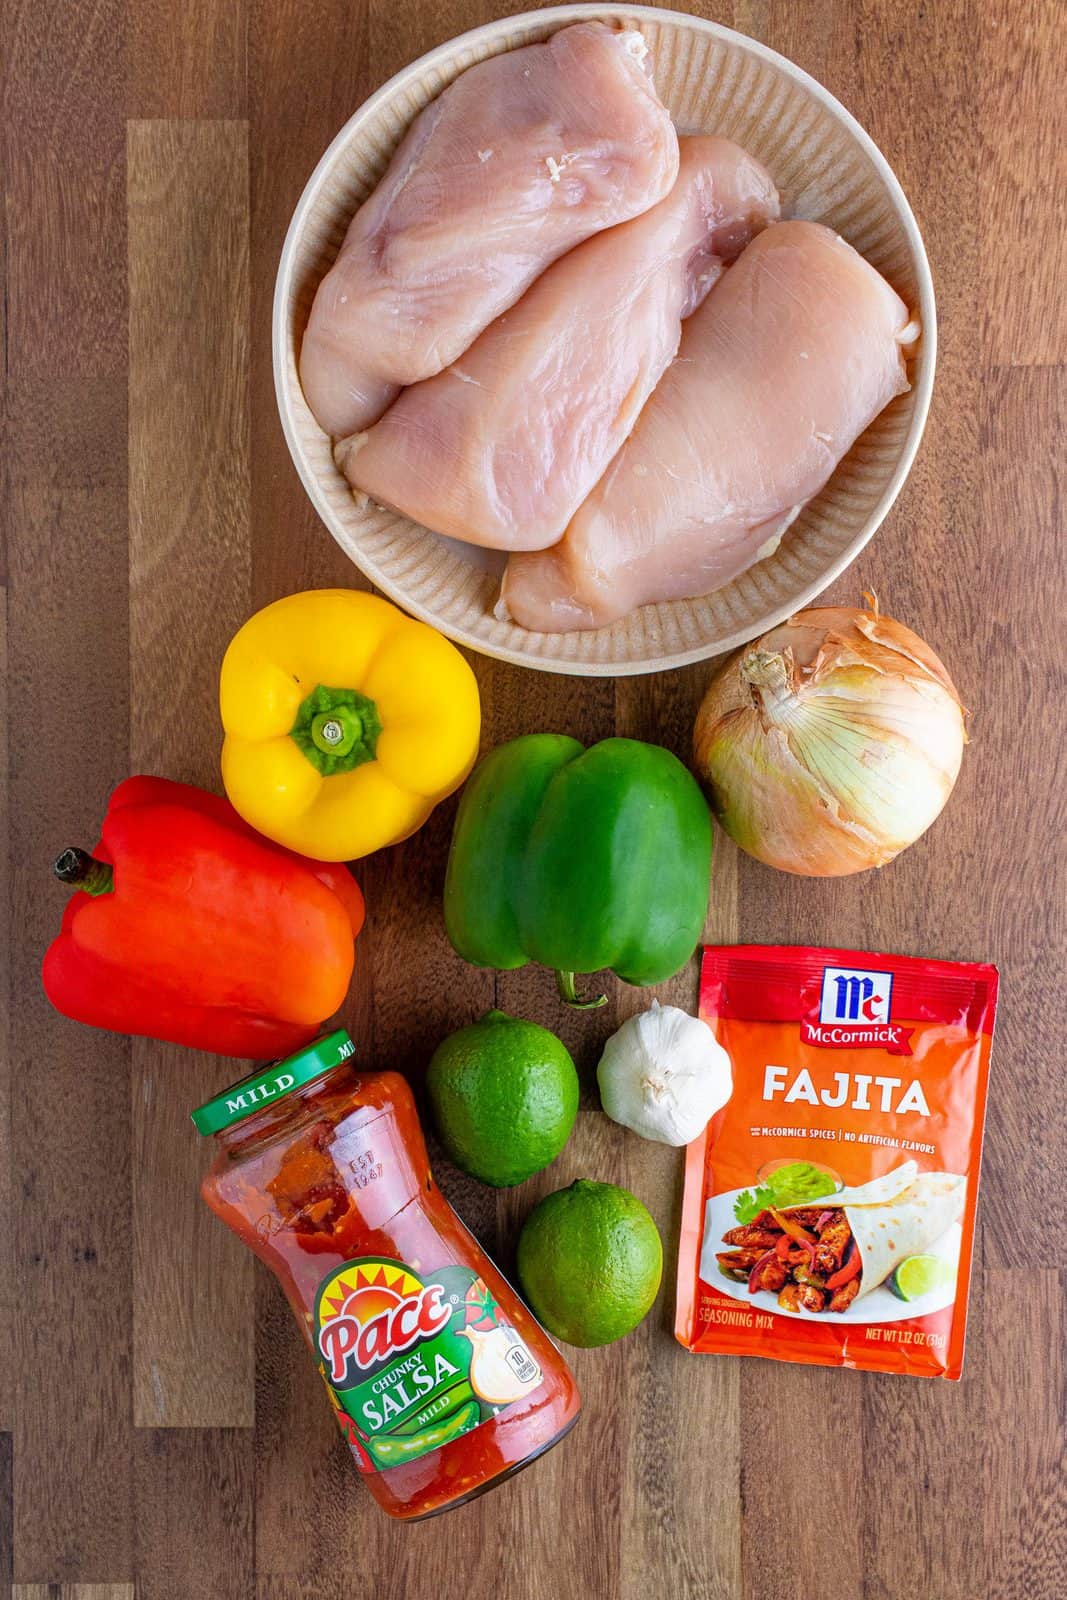 Ingredients needed to make chicken fajitas: red, yellow, green bell peppers, onion, garlic, salsa, boneless, skinless chicken breasts, fajita seasoning, fresh lime juice